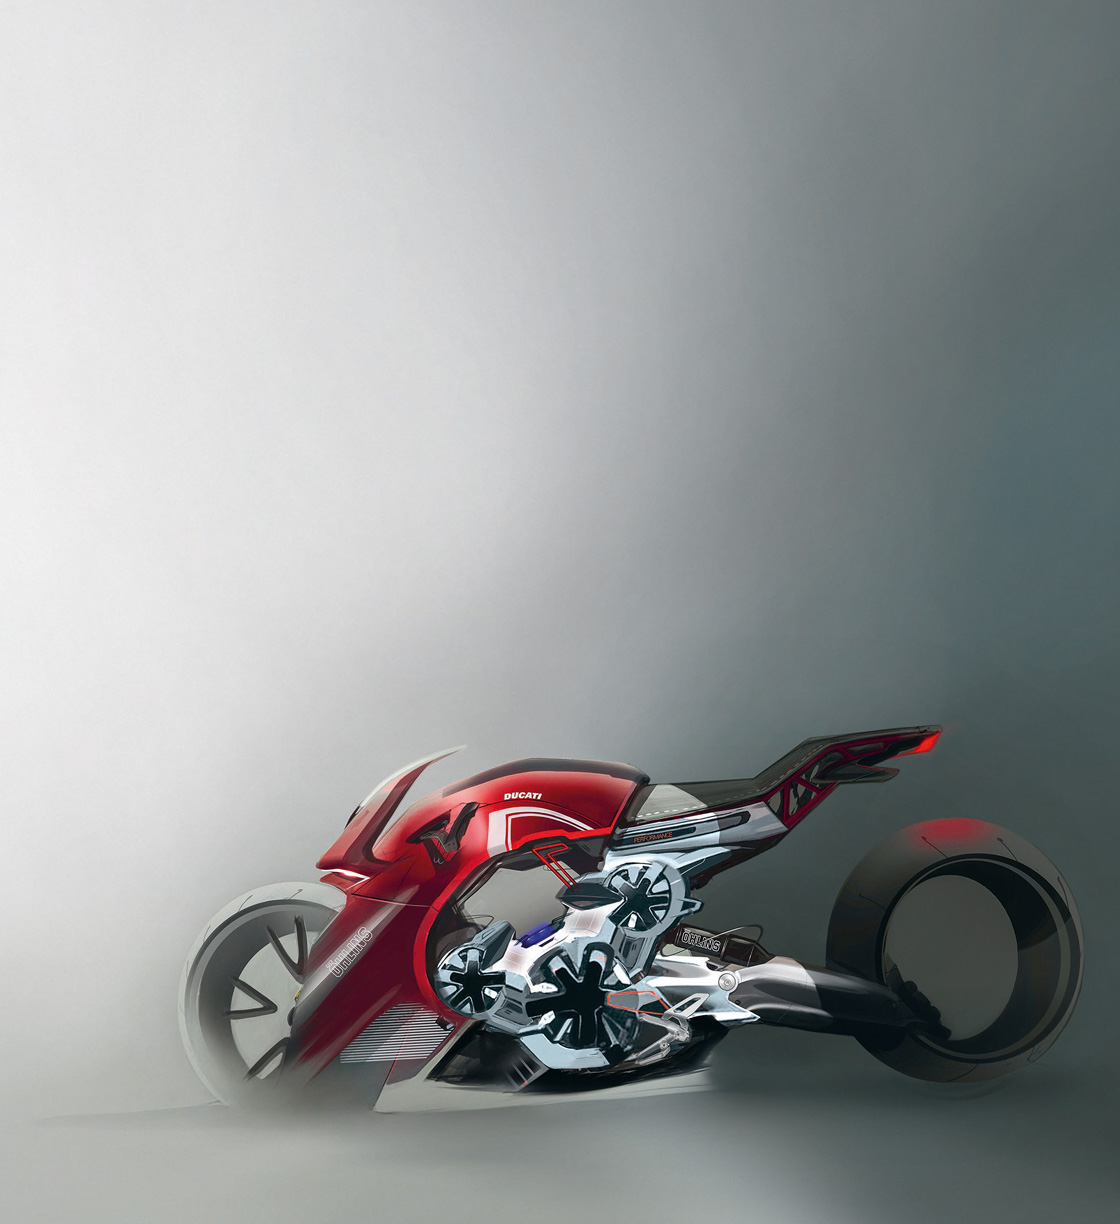 Ducati (photo)